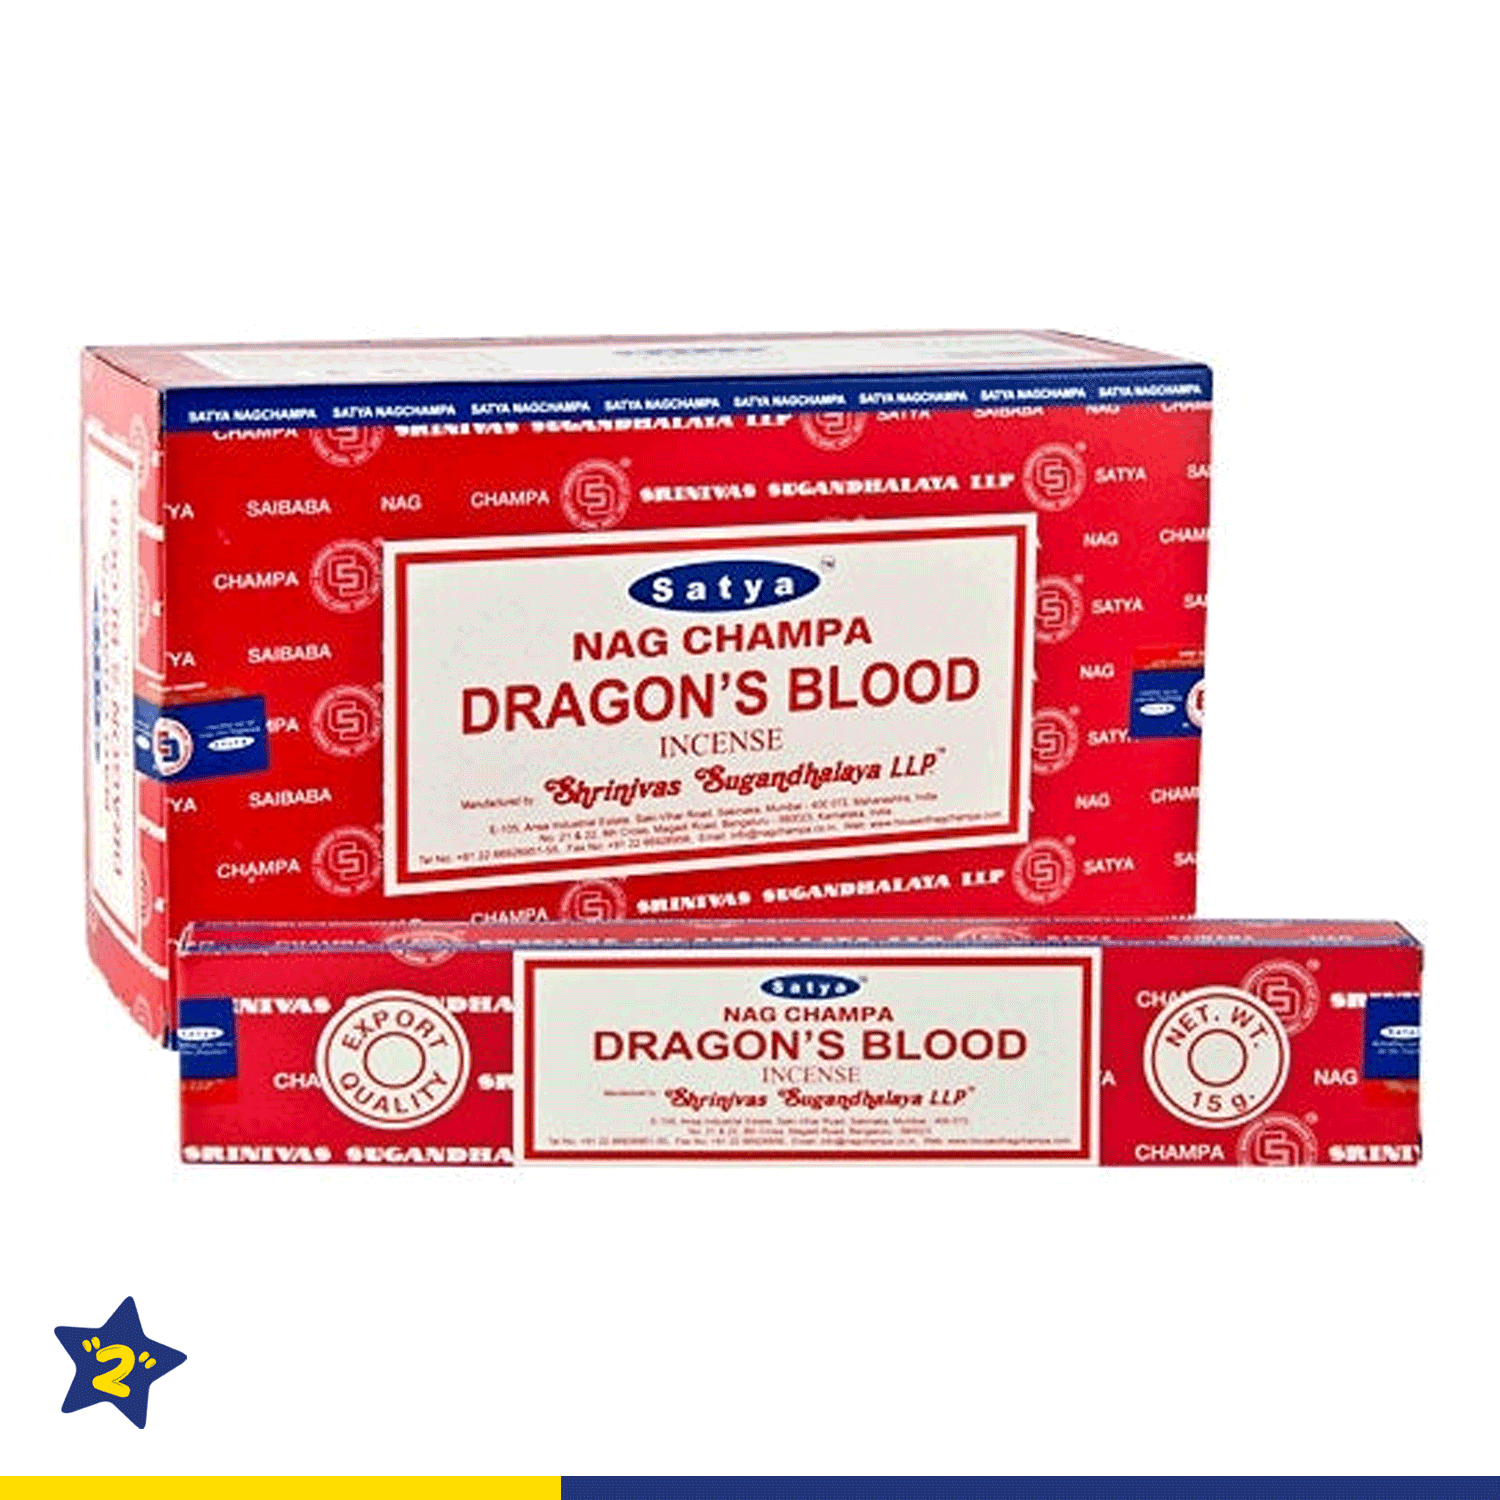 Nag Champa Dragon's Blood Incense